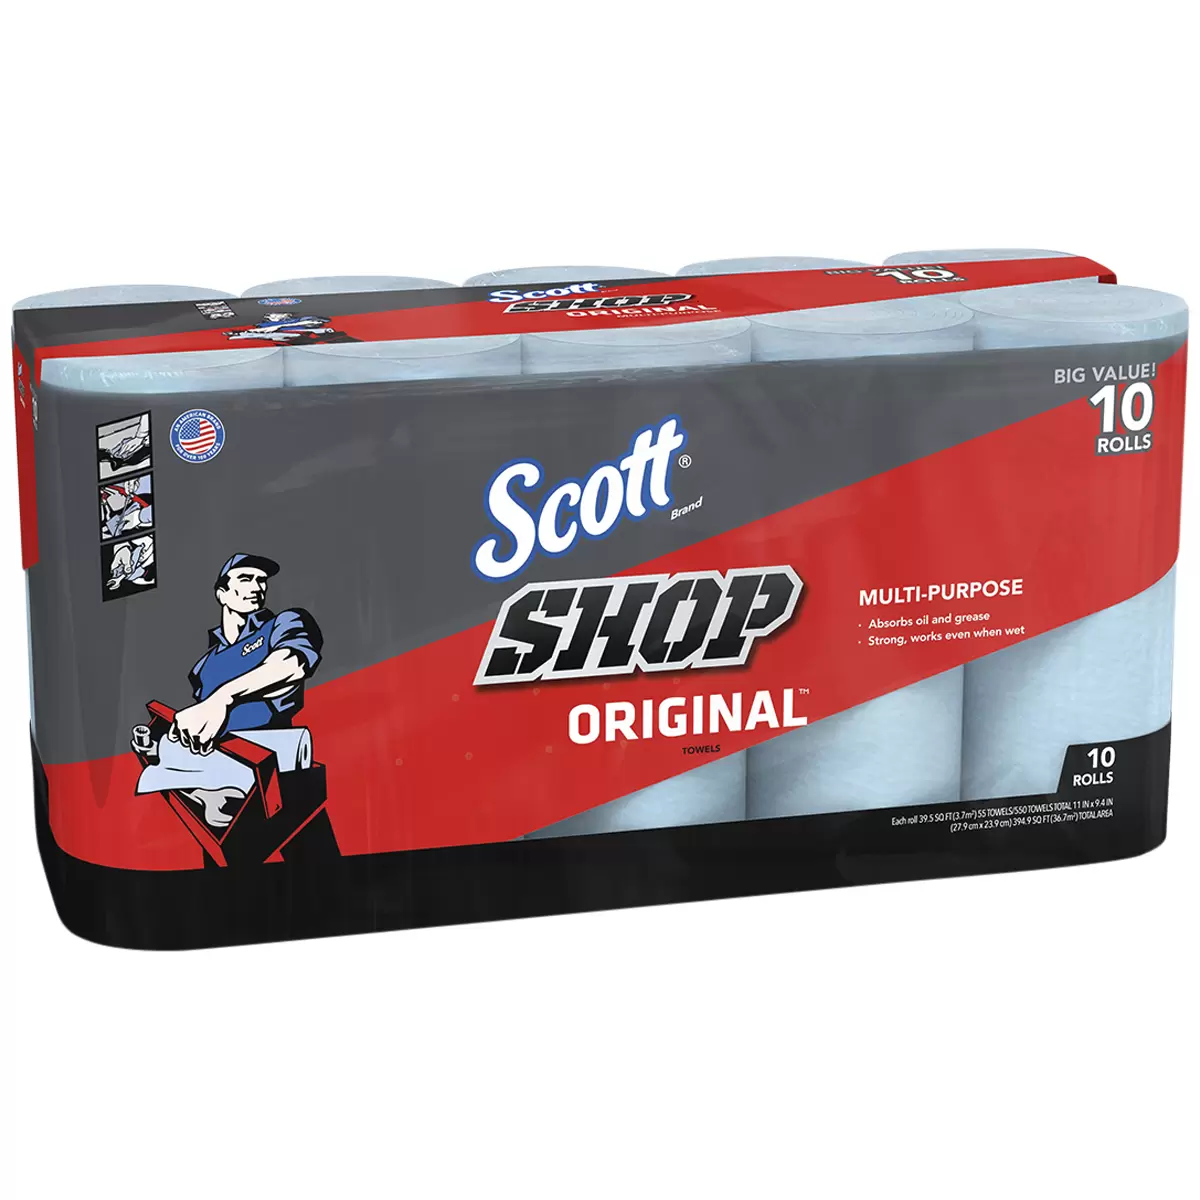 Scott Shop Multi-Purpose Towels 10 Pack